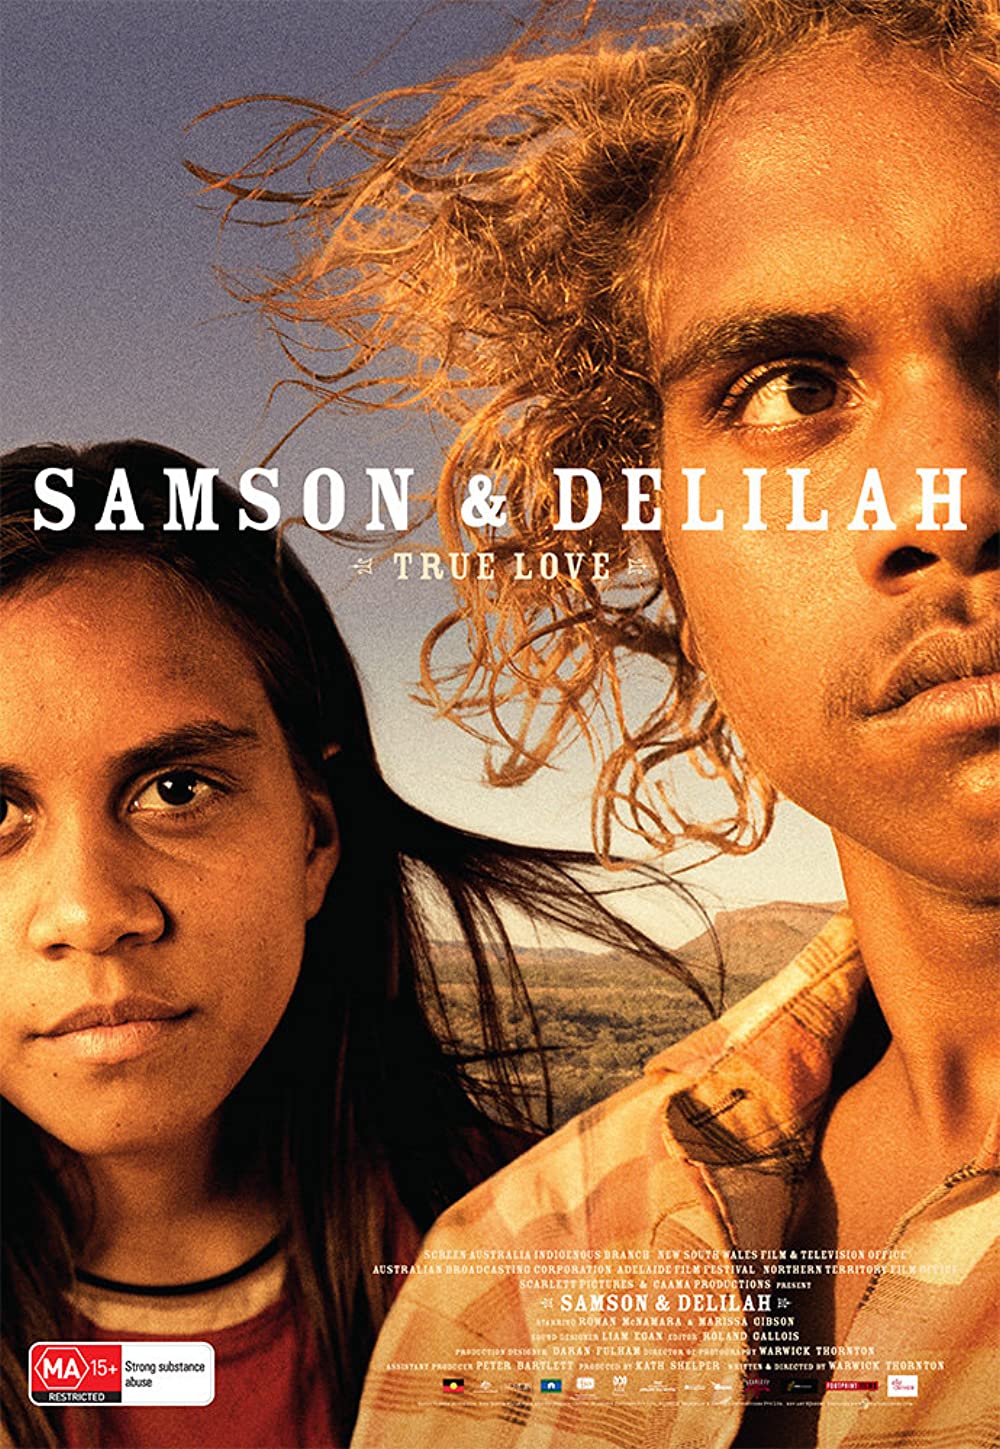 Filmbeschreibung zu Samson & Delilah